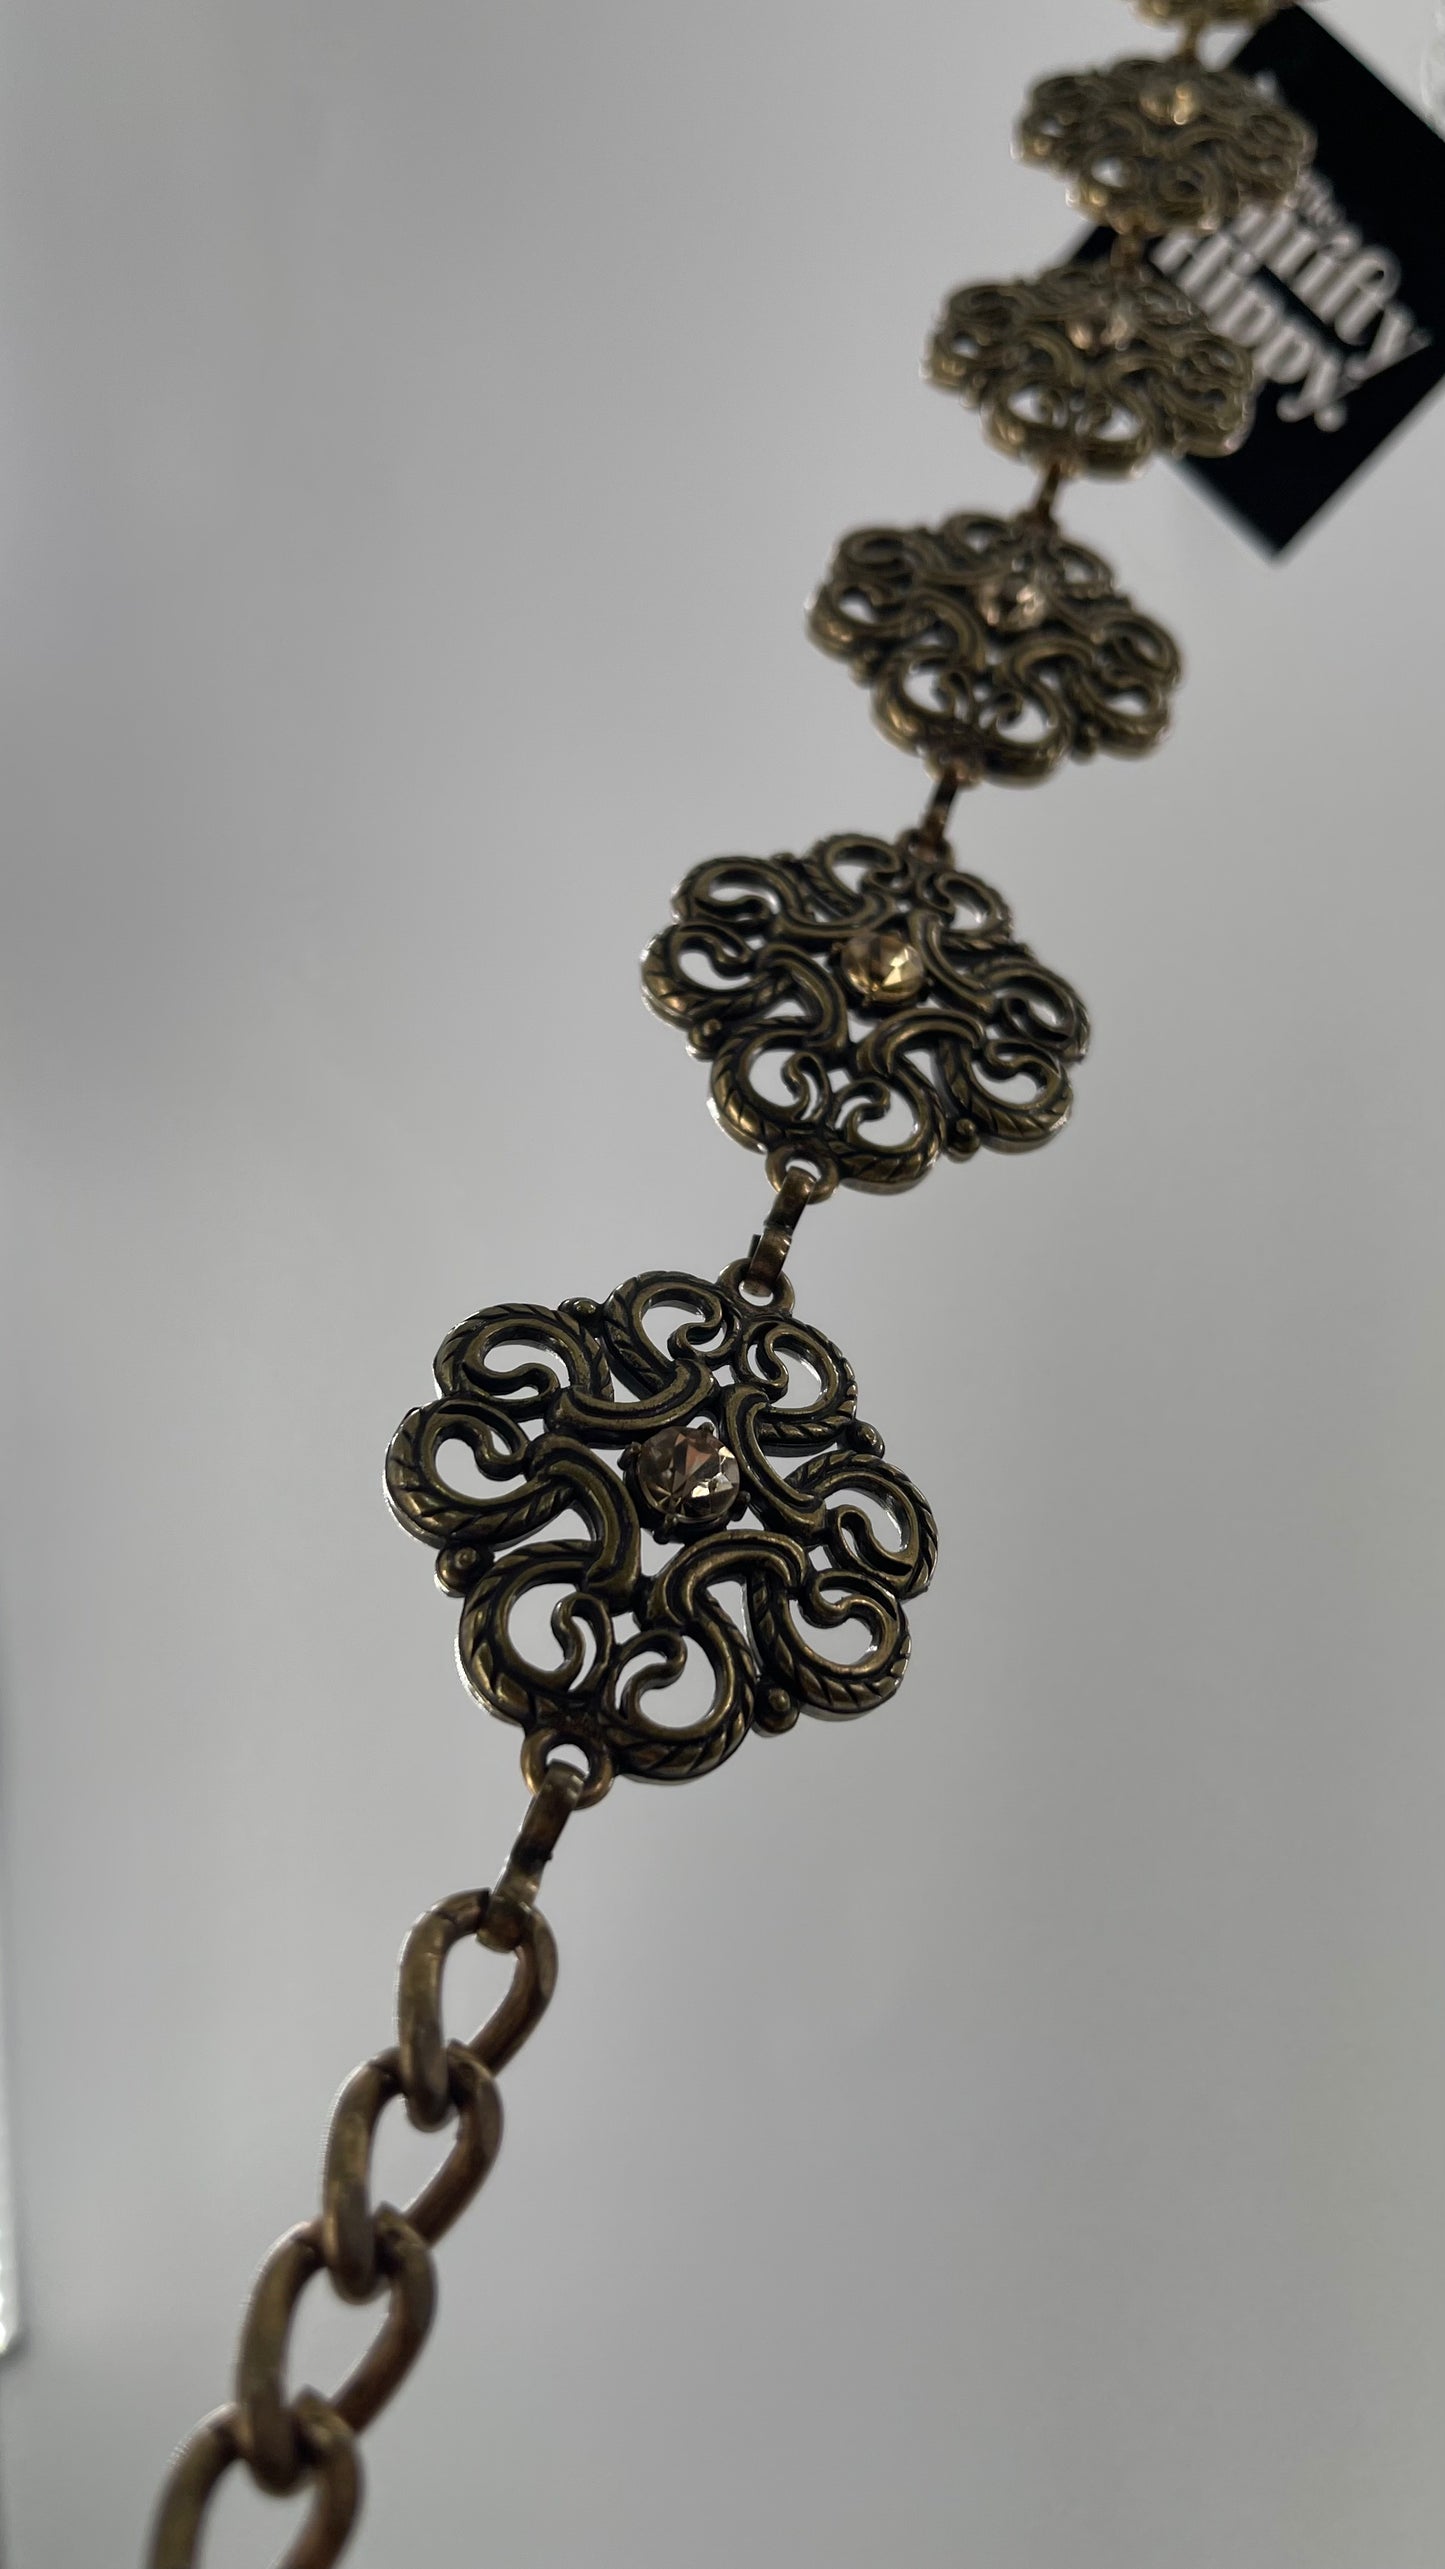 Vintage Gold/Bronze Metal Chain Belt with Rhinestone Embellishments (S/M)